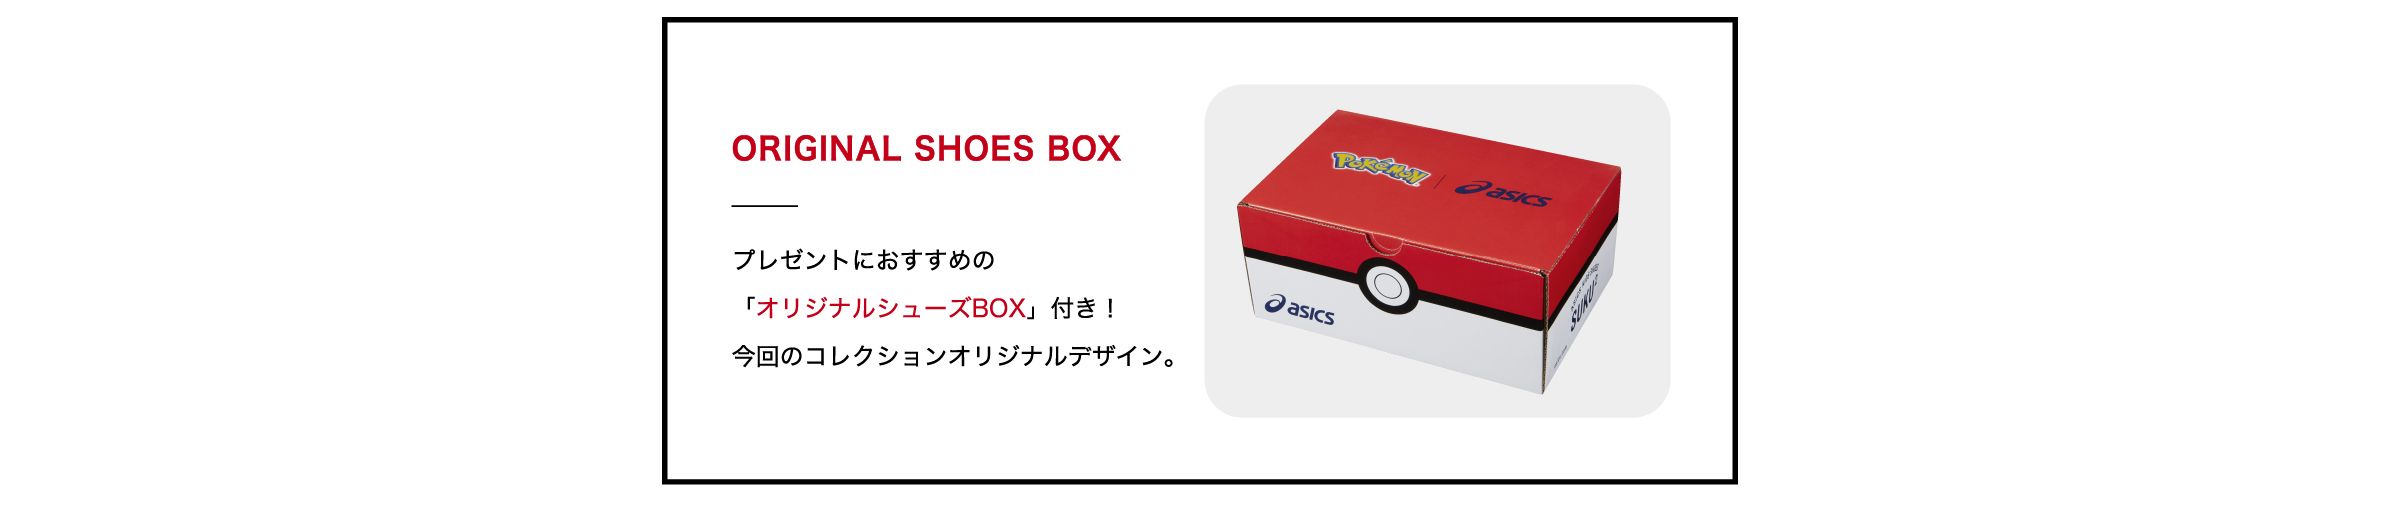 ORIGINAL SHOES BOX プレゼントにおすすめの 「オリジナルシューズBOX」付き  今回のコレクションオリジナルデザイン